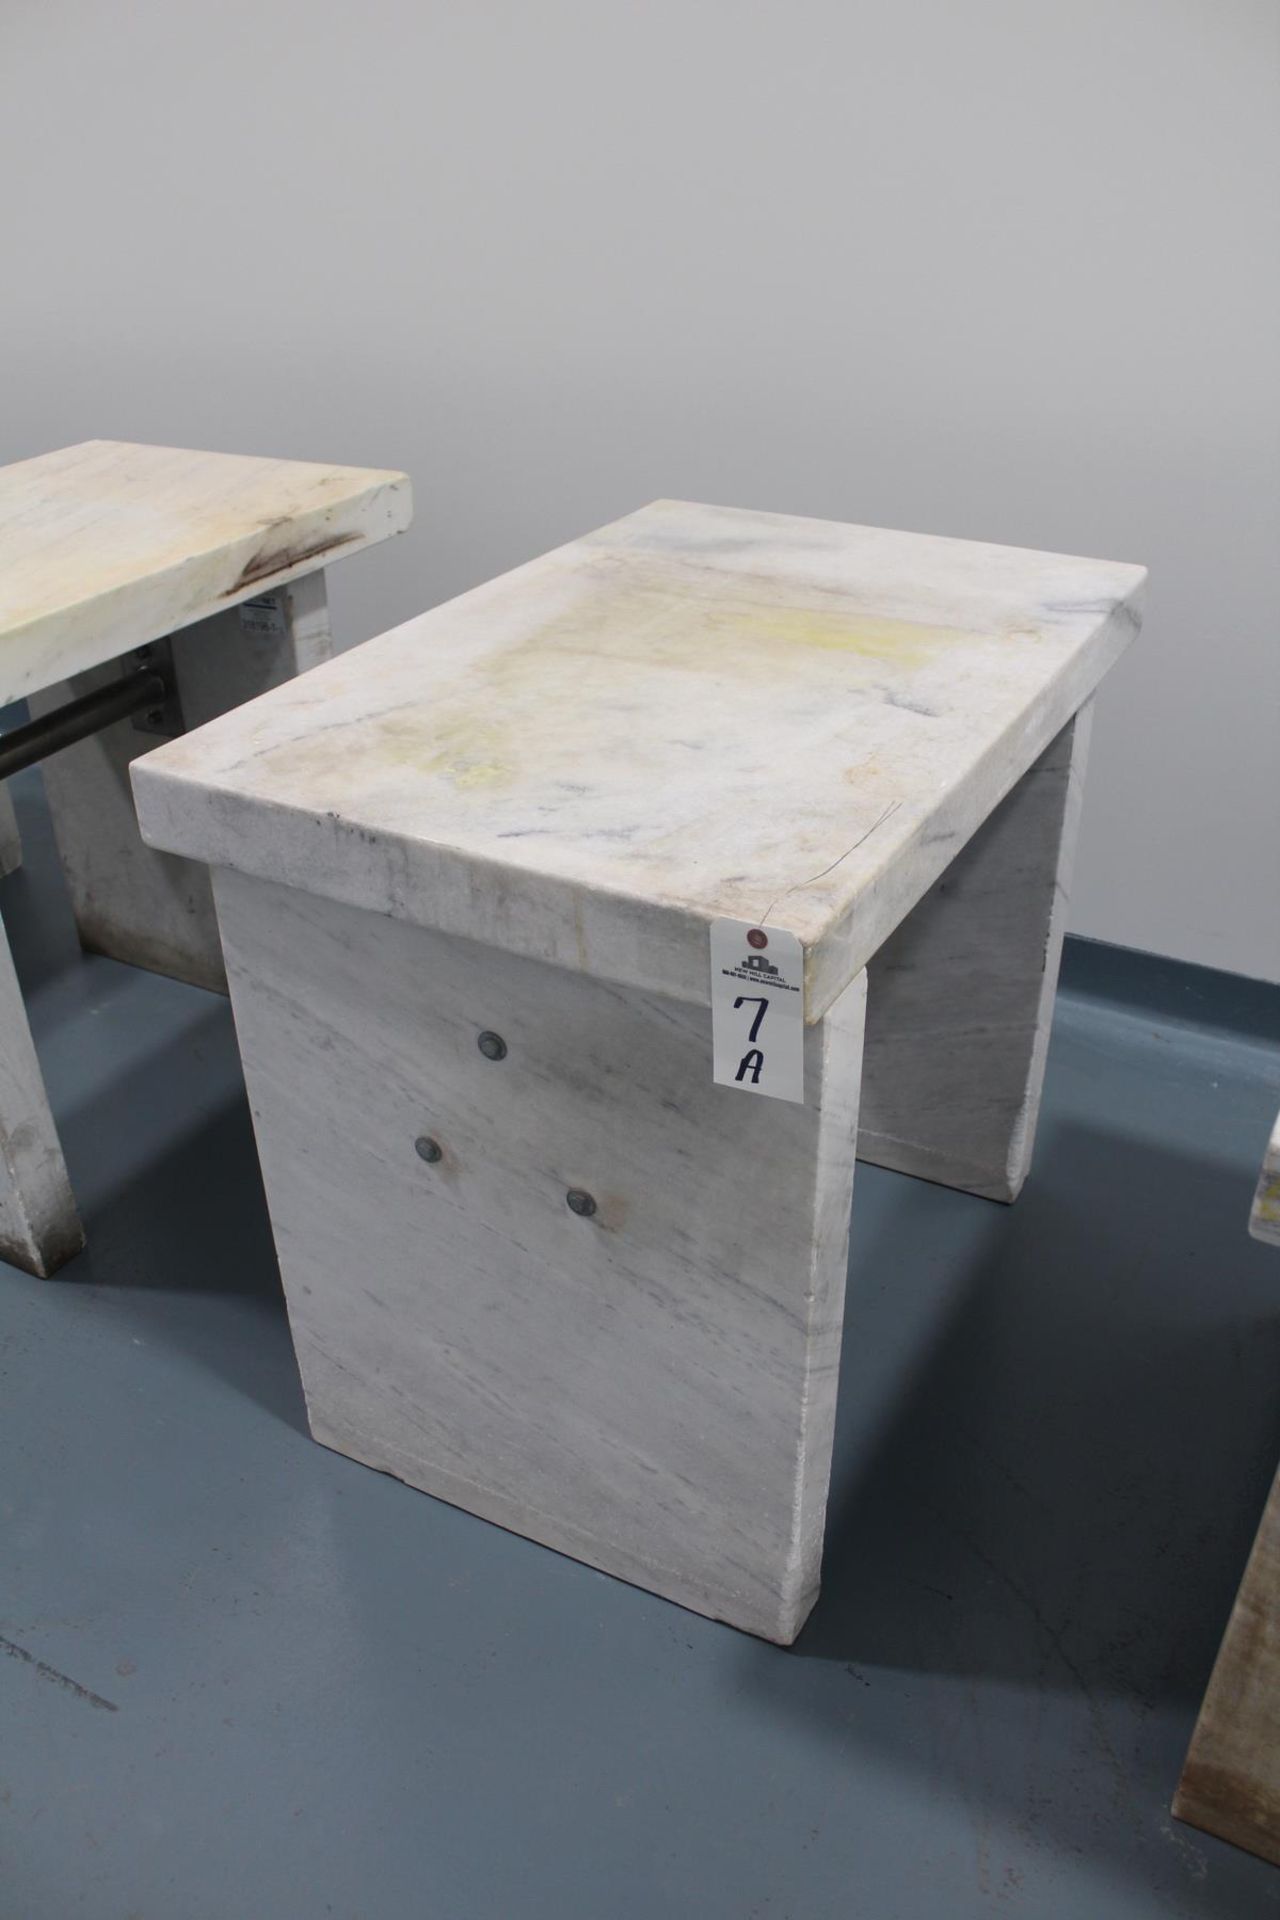 Marble Balance Table, 24" x 35" x 3" | Rig Fee: $60